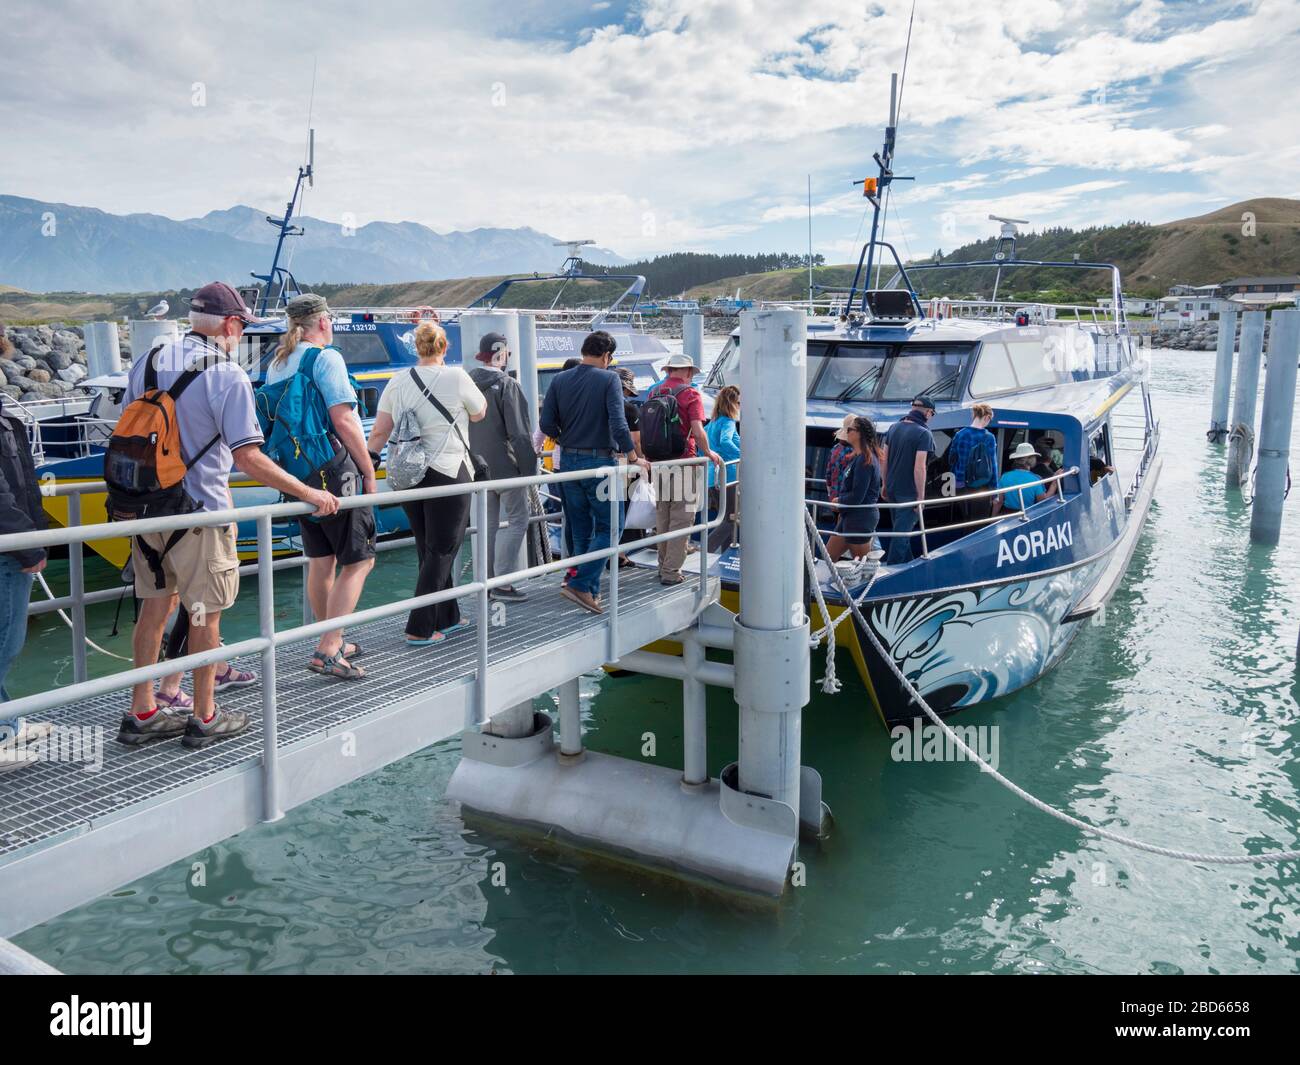 Tourists boarding the boat Aoraki on a whale watching trip in Kaikoura New Zealand Stock Photo